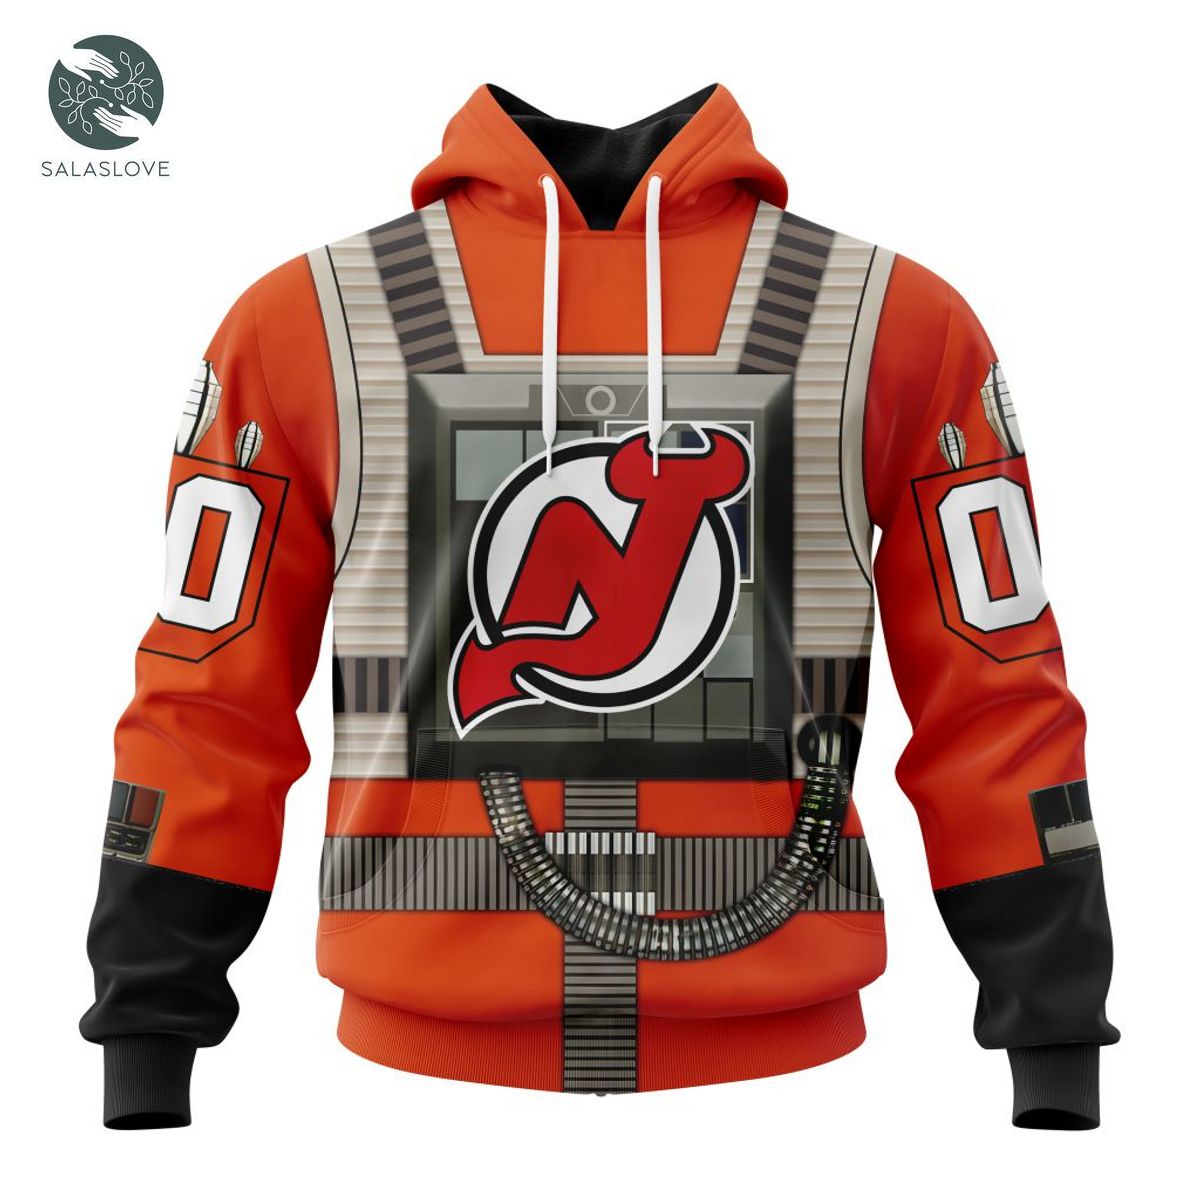 NHL New Jersey Devils Star Wars Rebel Pilot Design Hoodie